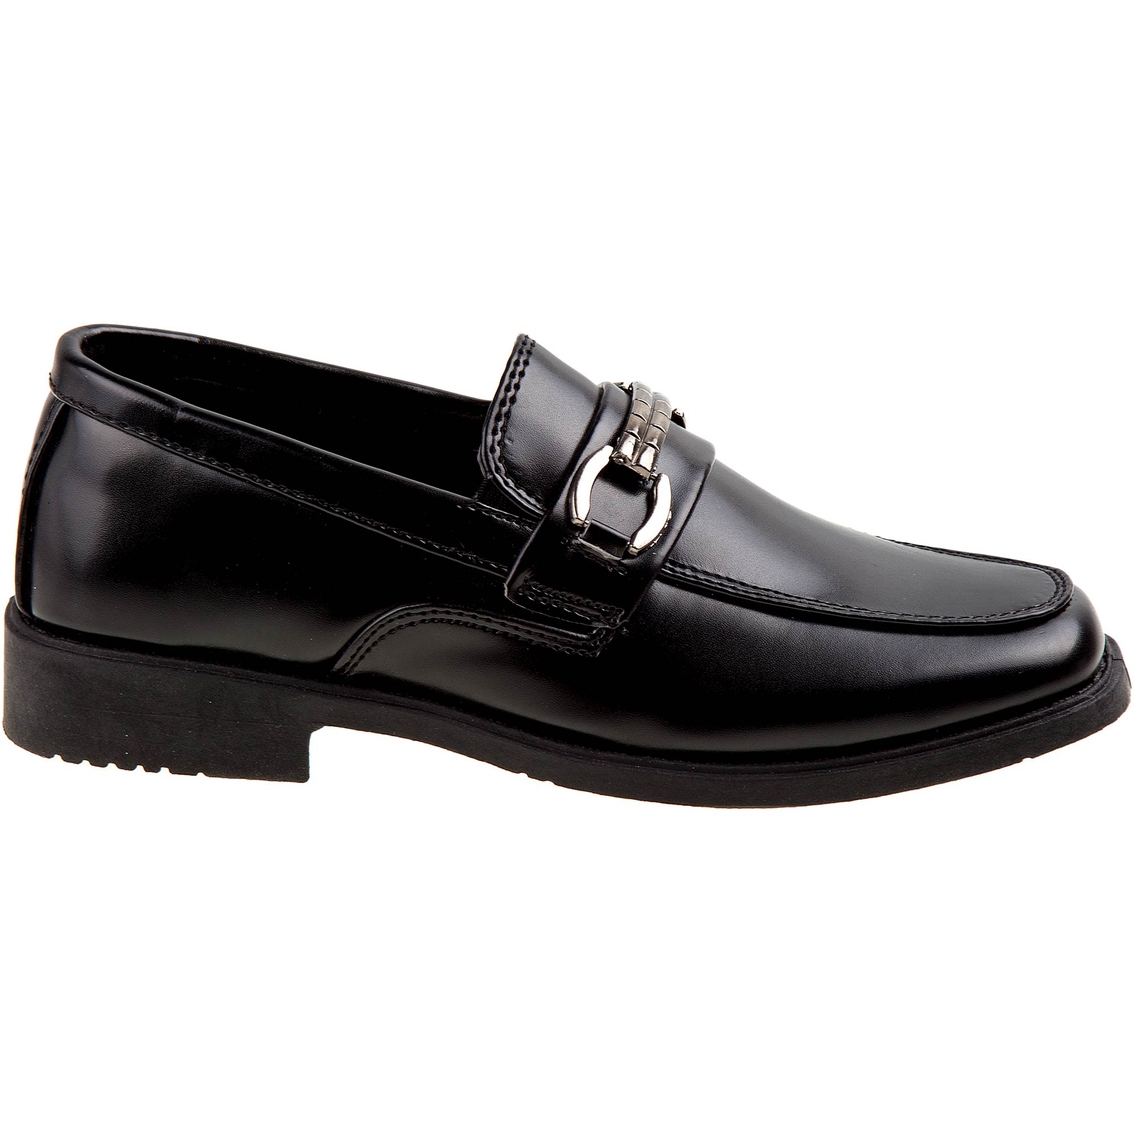 Josmo Boys Dress Shoes - Image 2 of 4